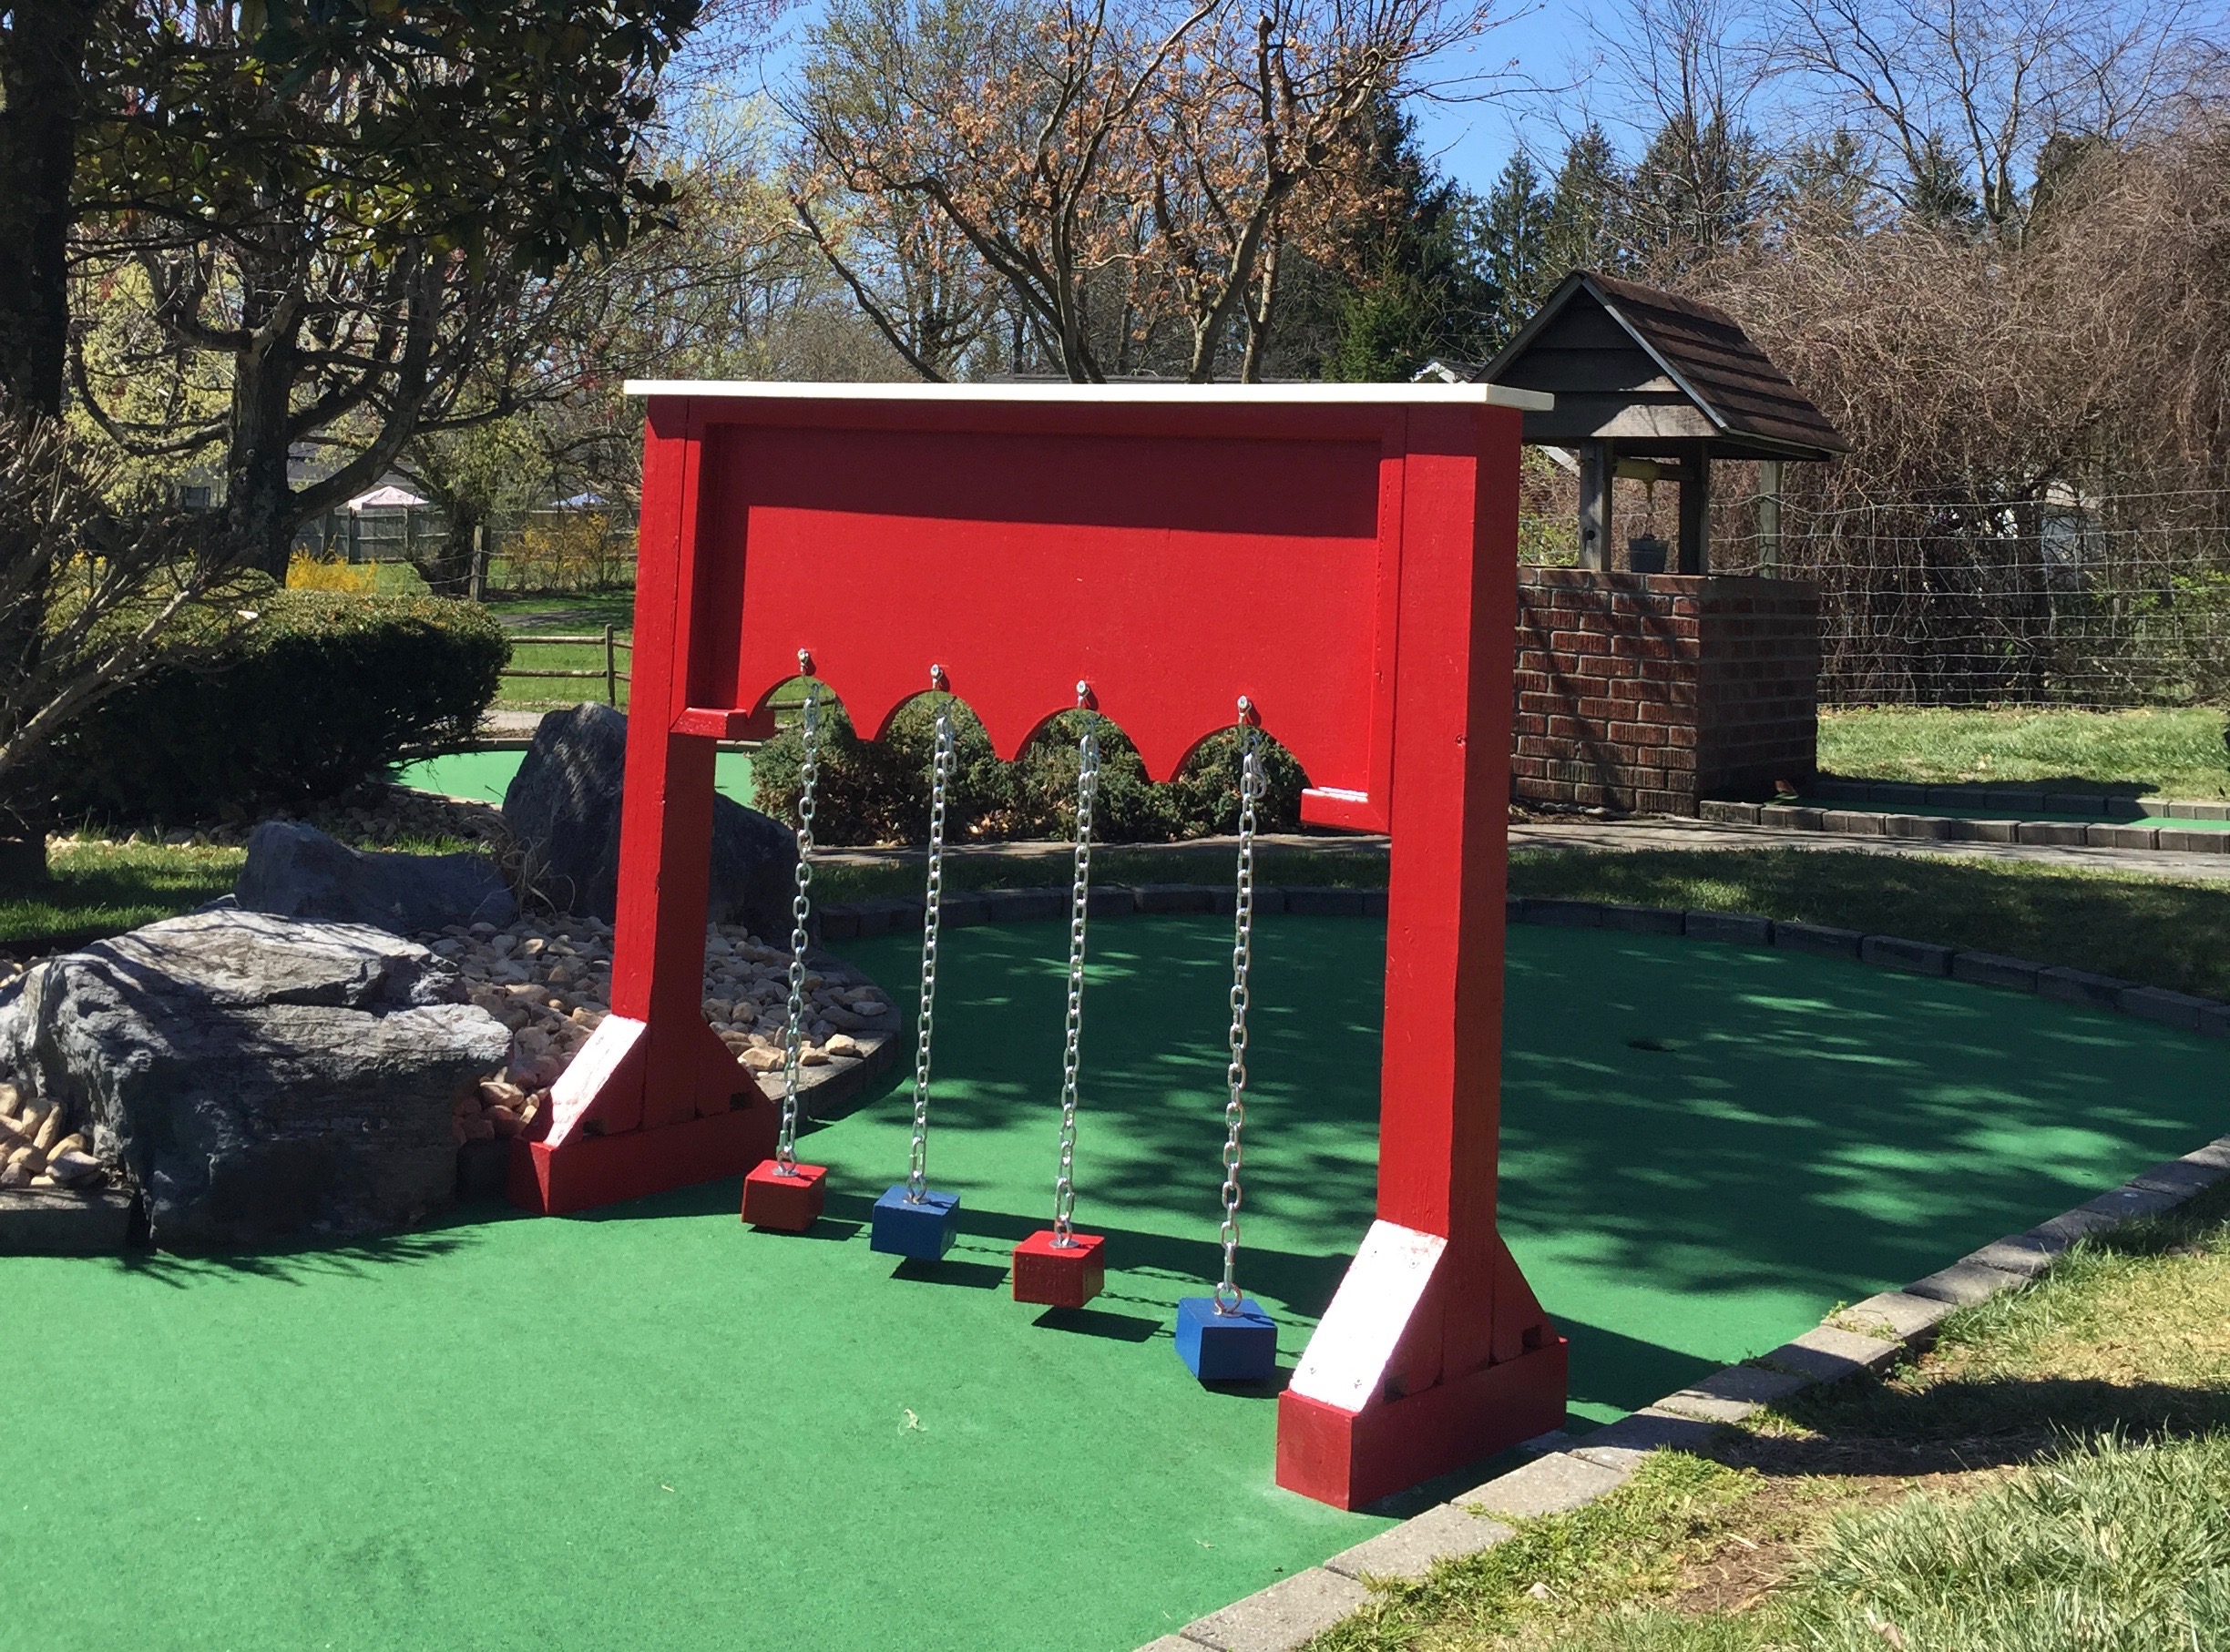 Cox's Hole Landscaped Miniature Golf